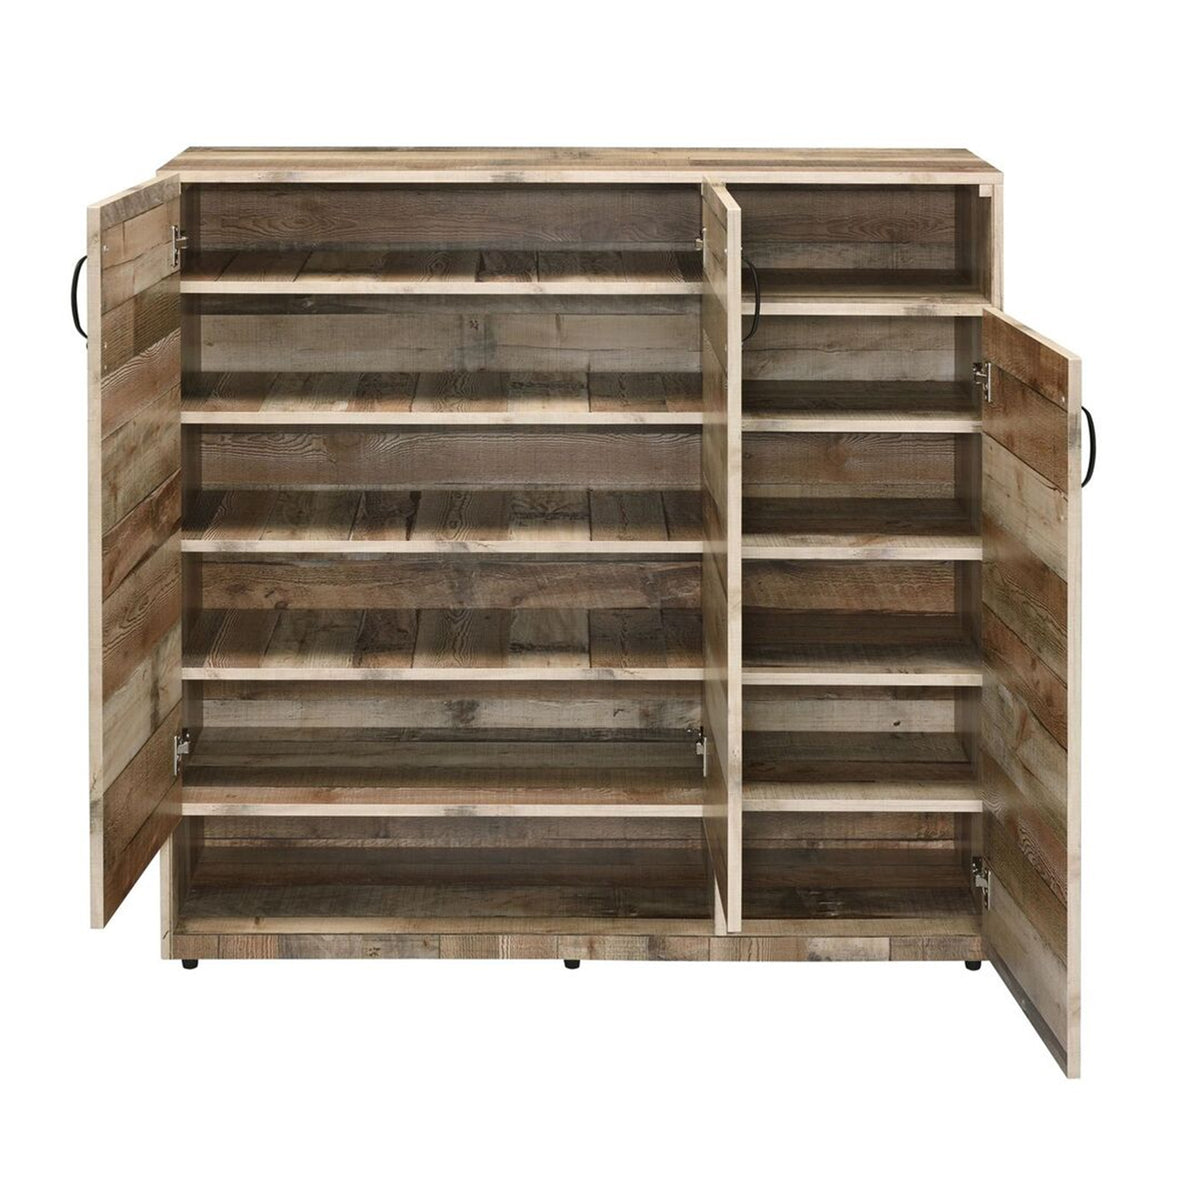 3 Door Wooden Shoe Cabinet with Multiple Storage Compartments in Brown - BM211131